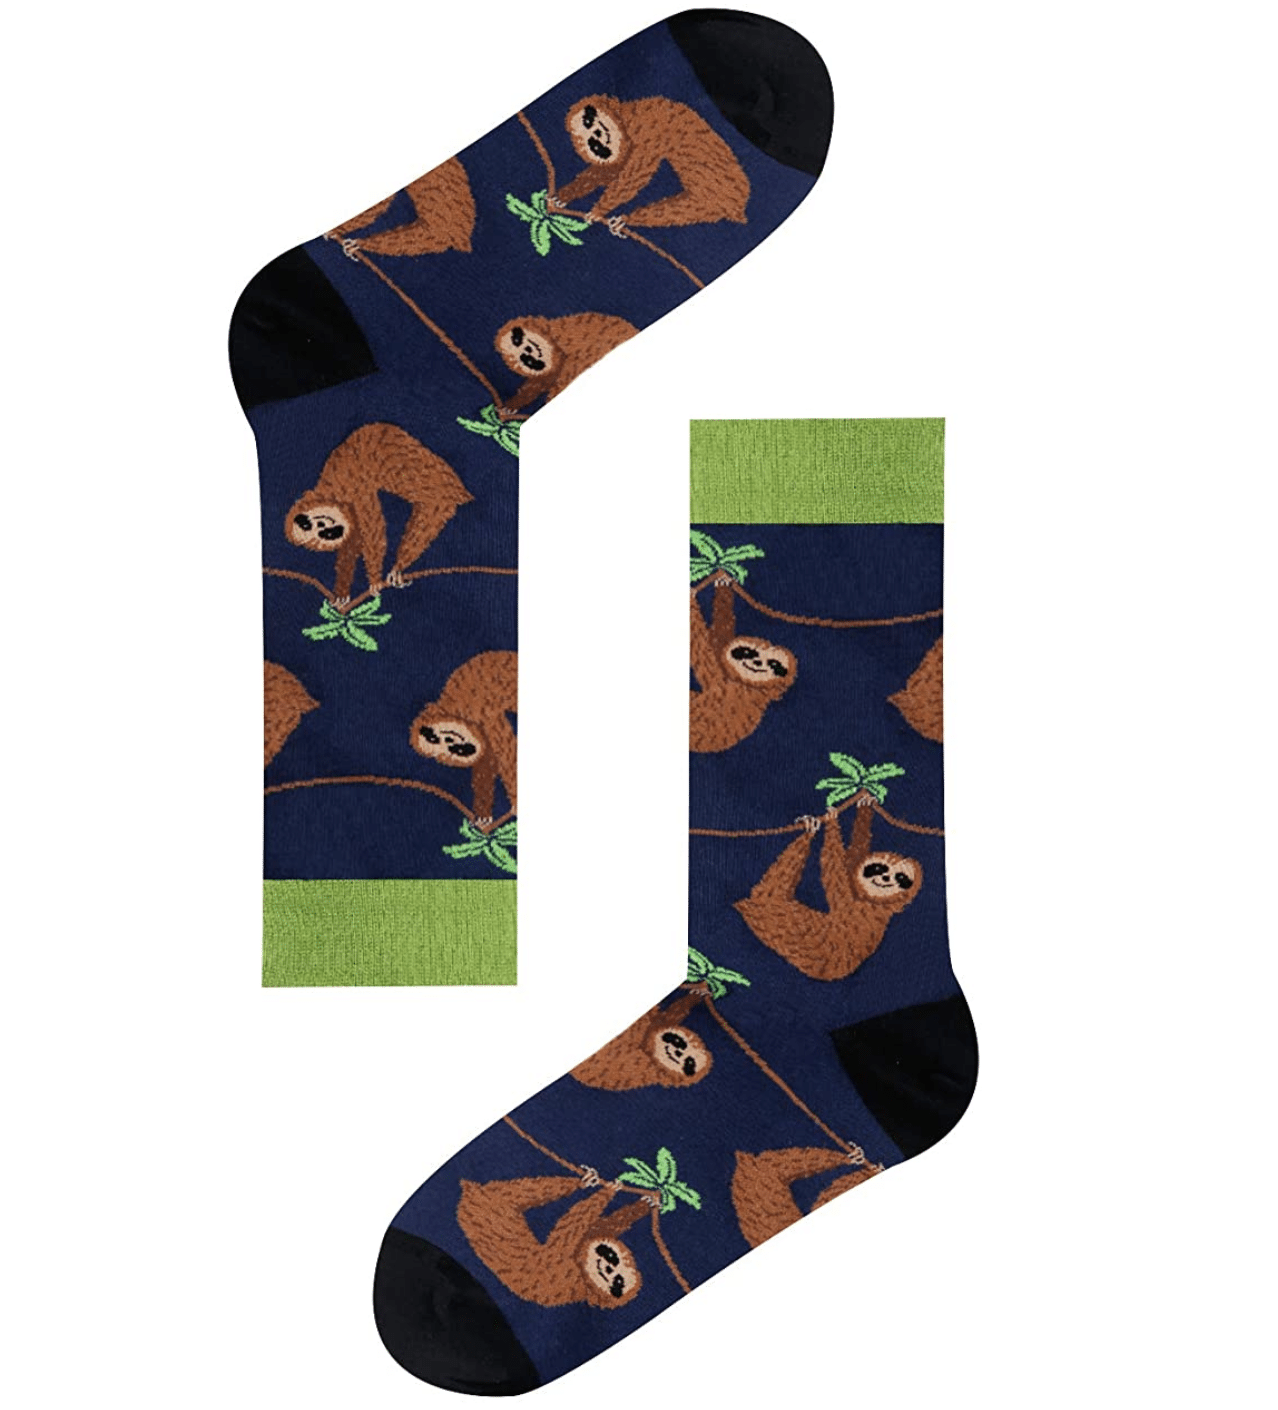 sloth-gifts-socks